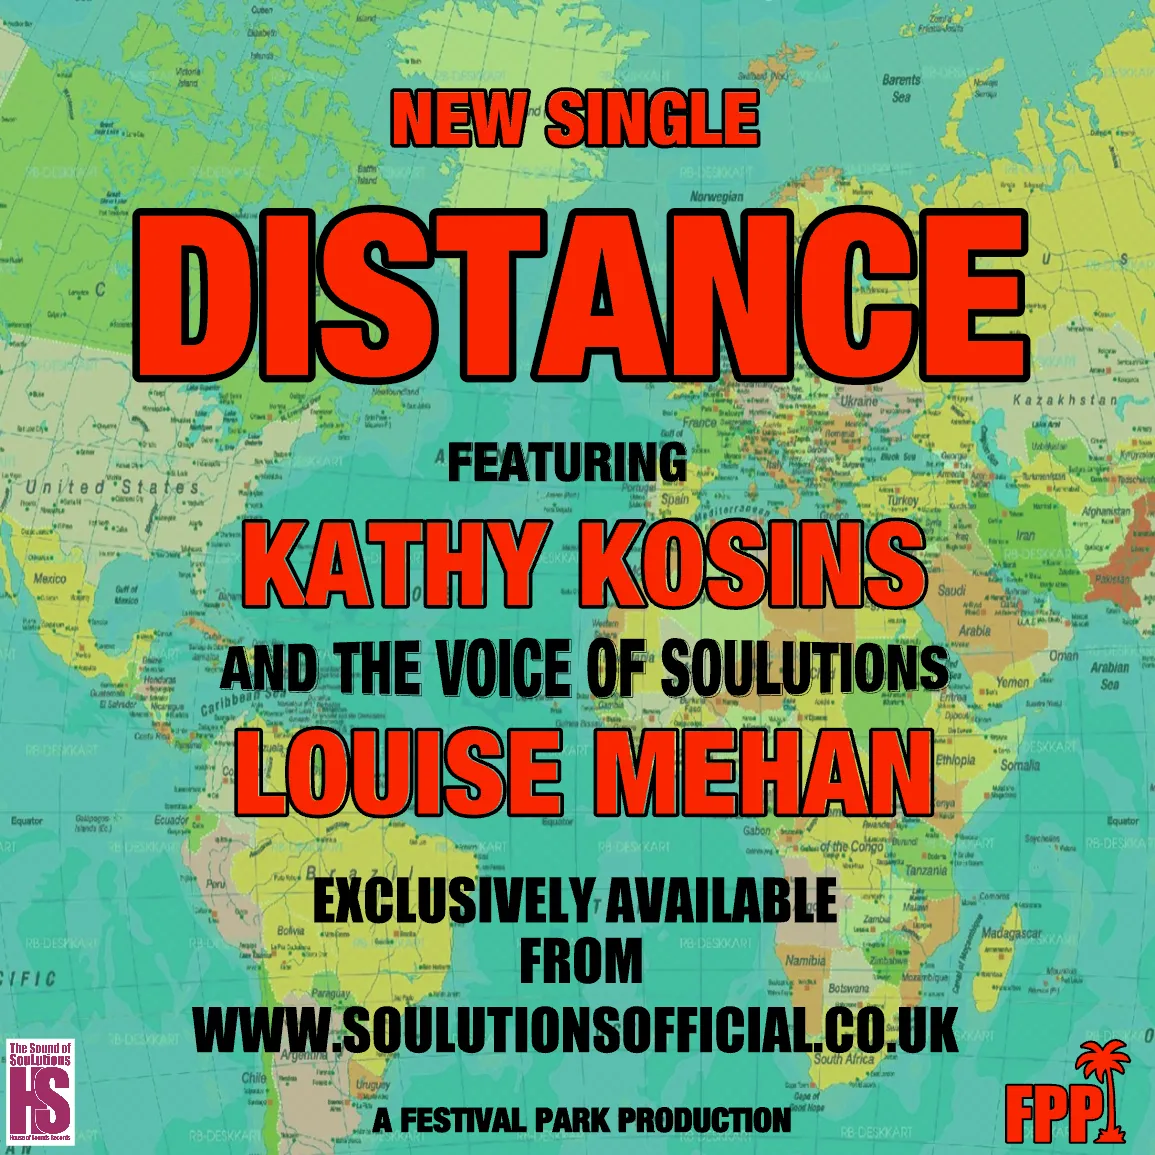 Distance album cover